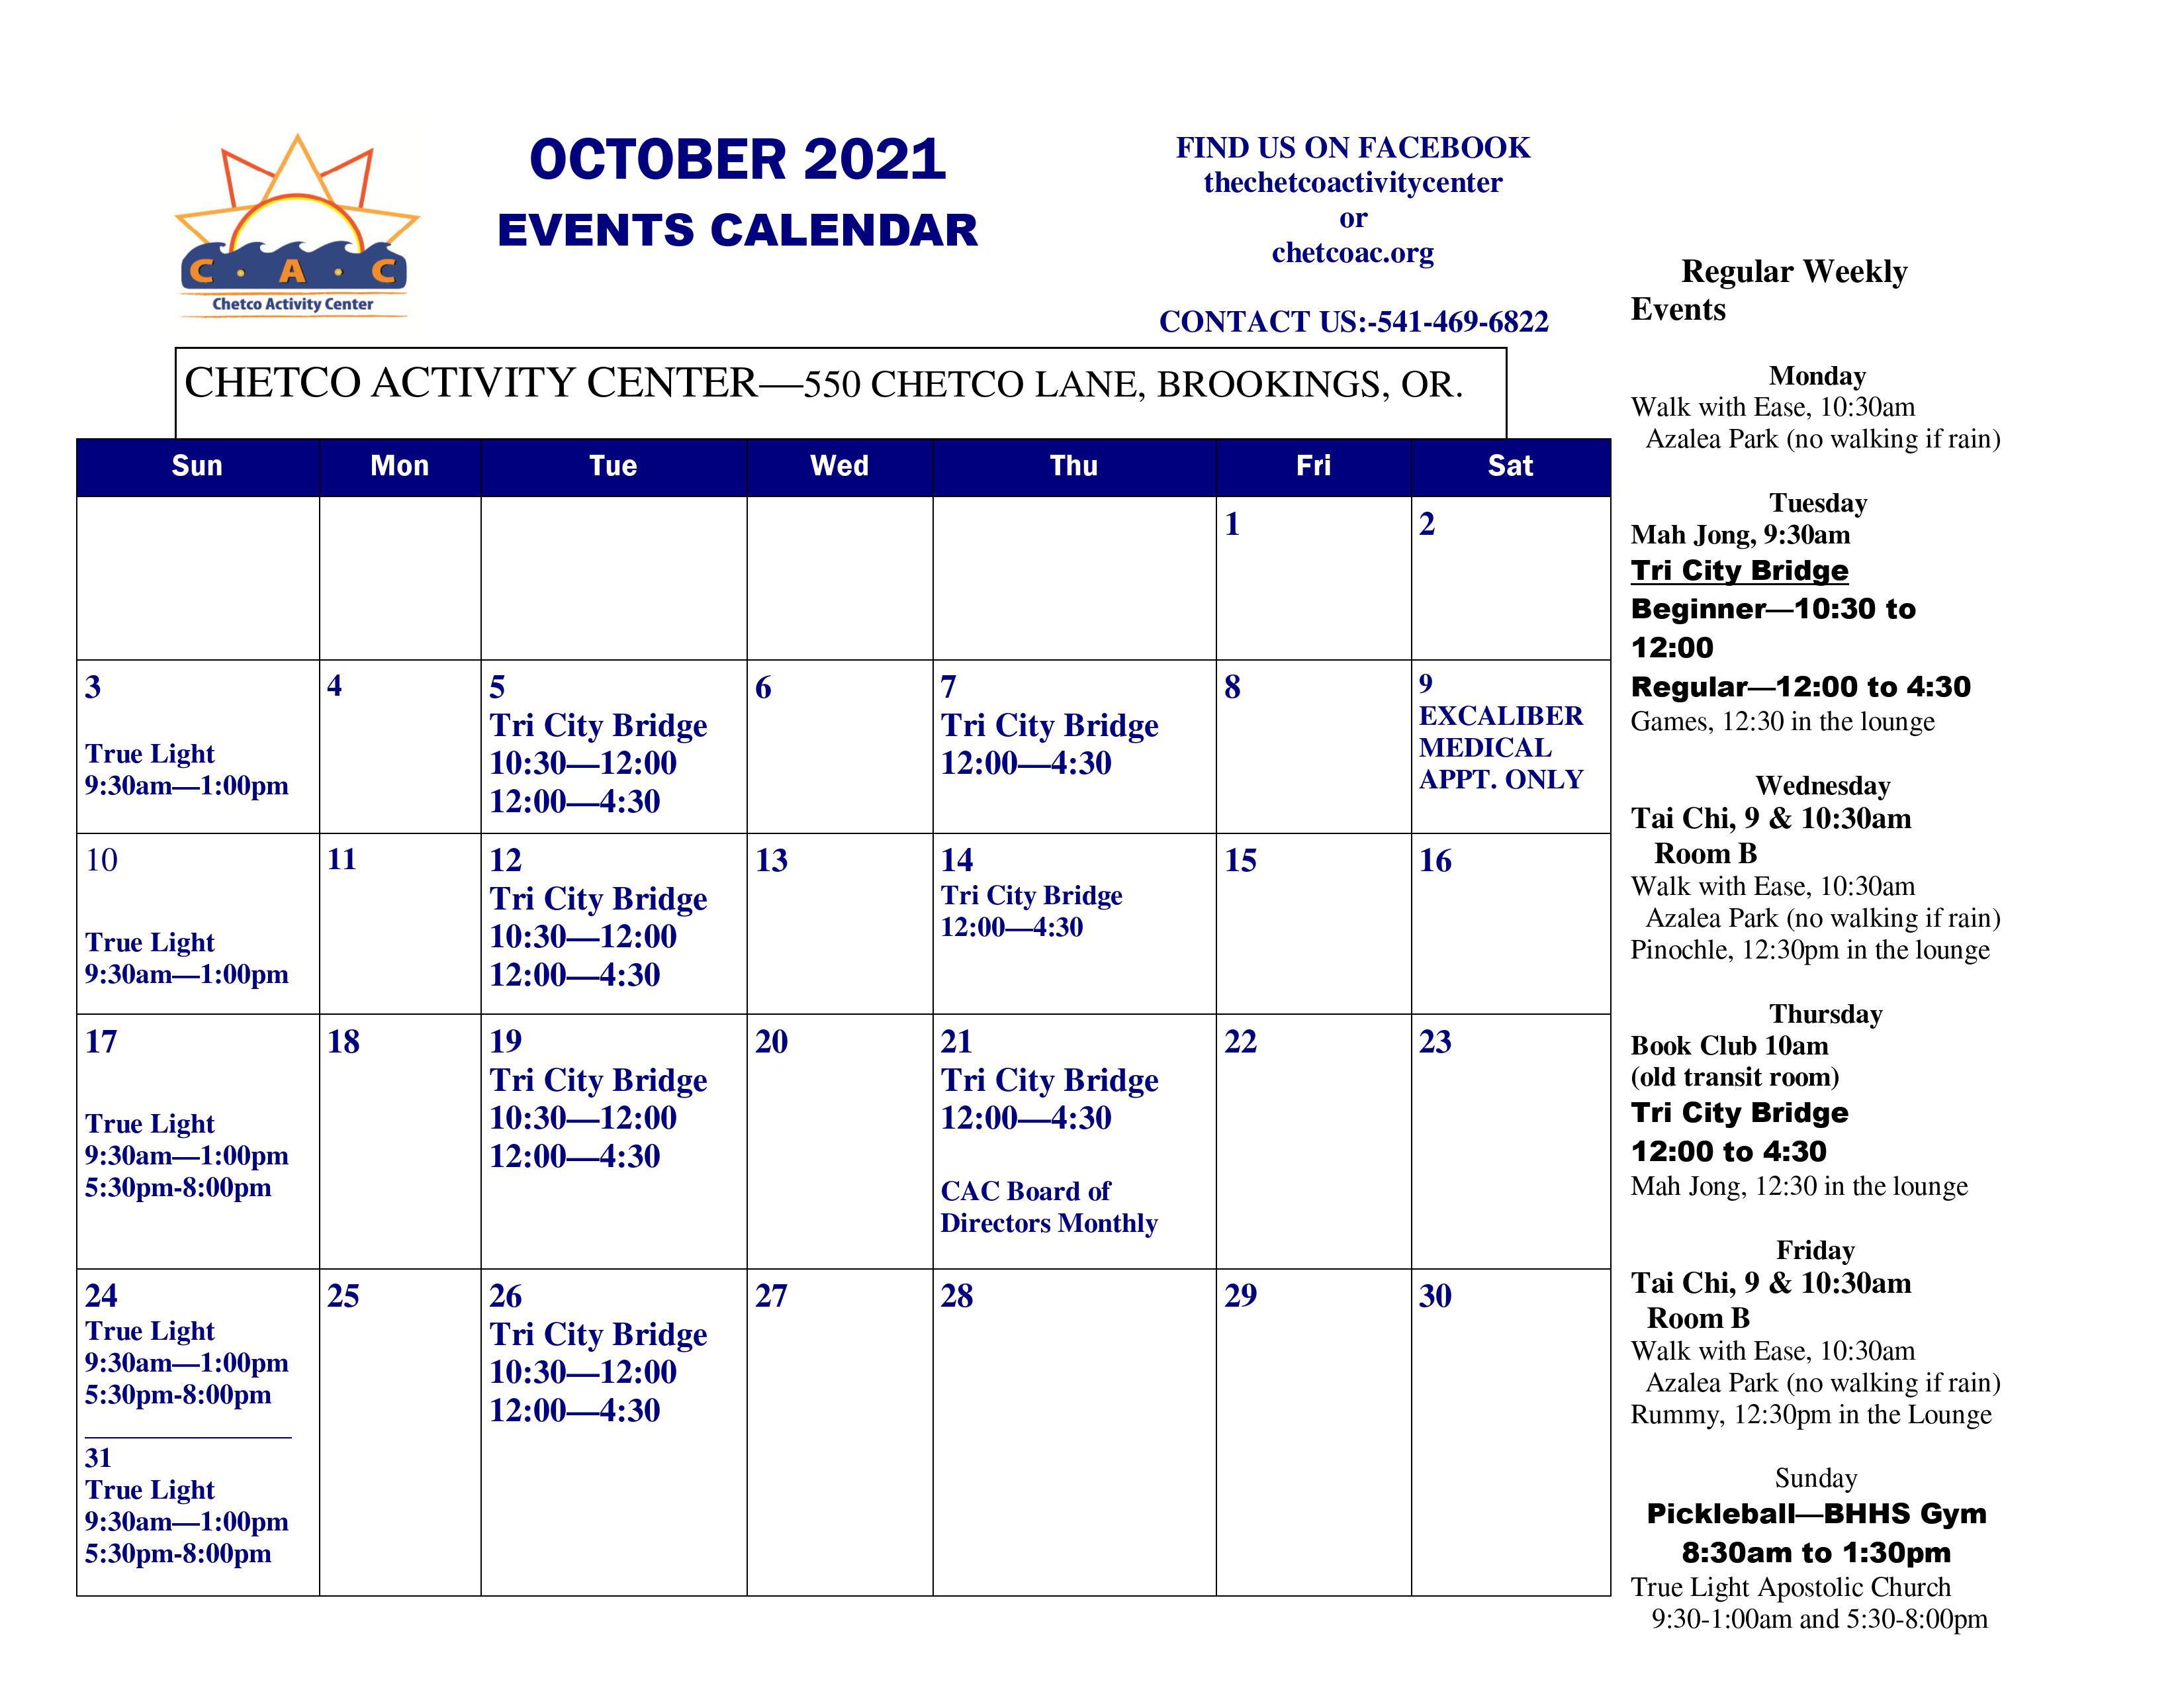 October Calendar of Events Chetco Activity Center